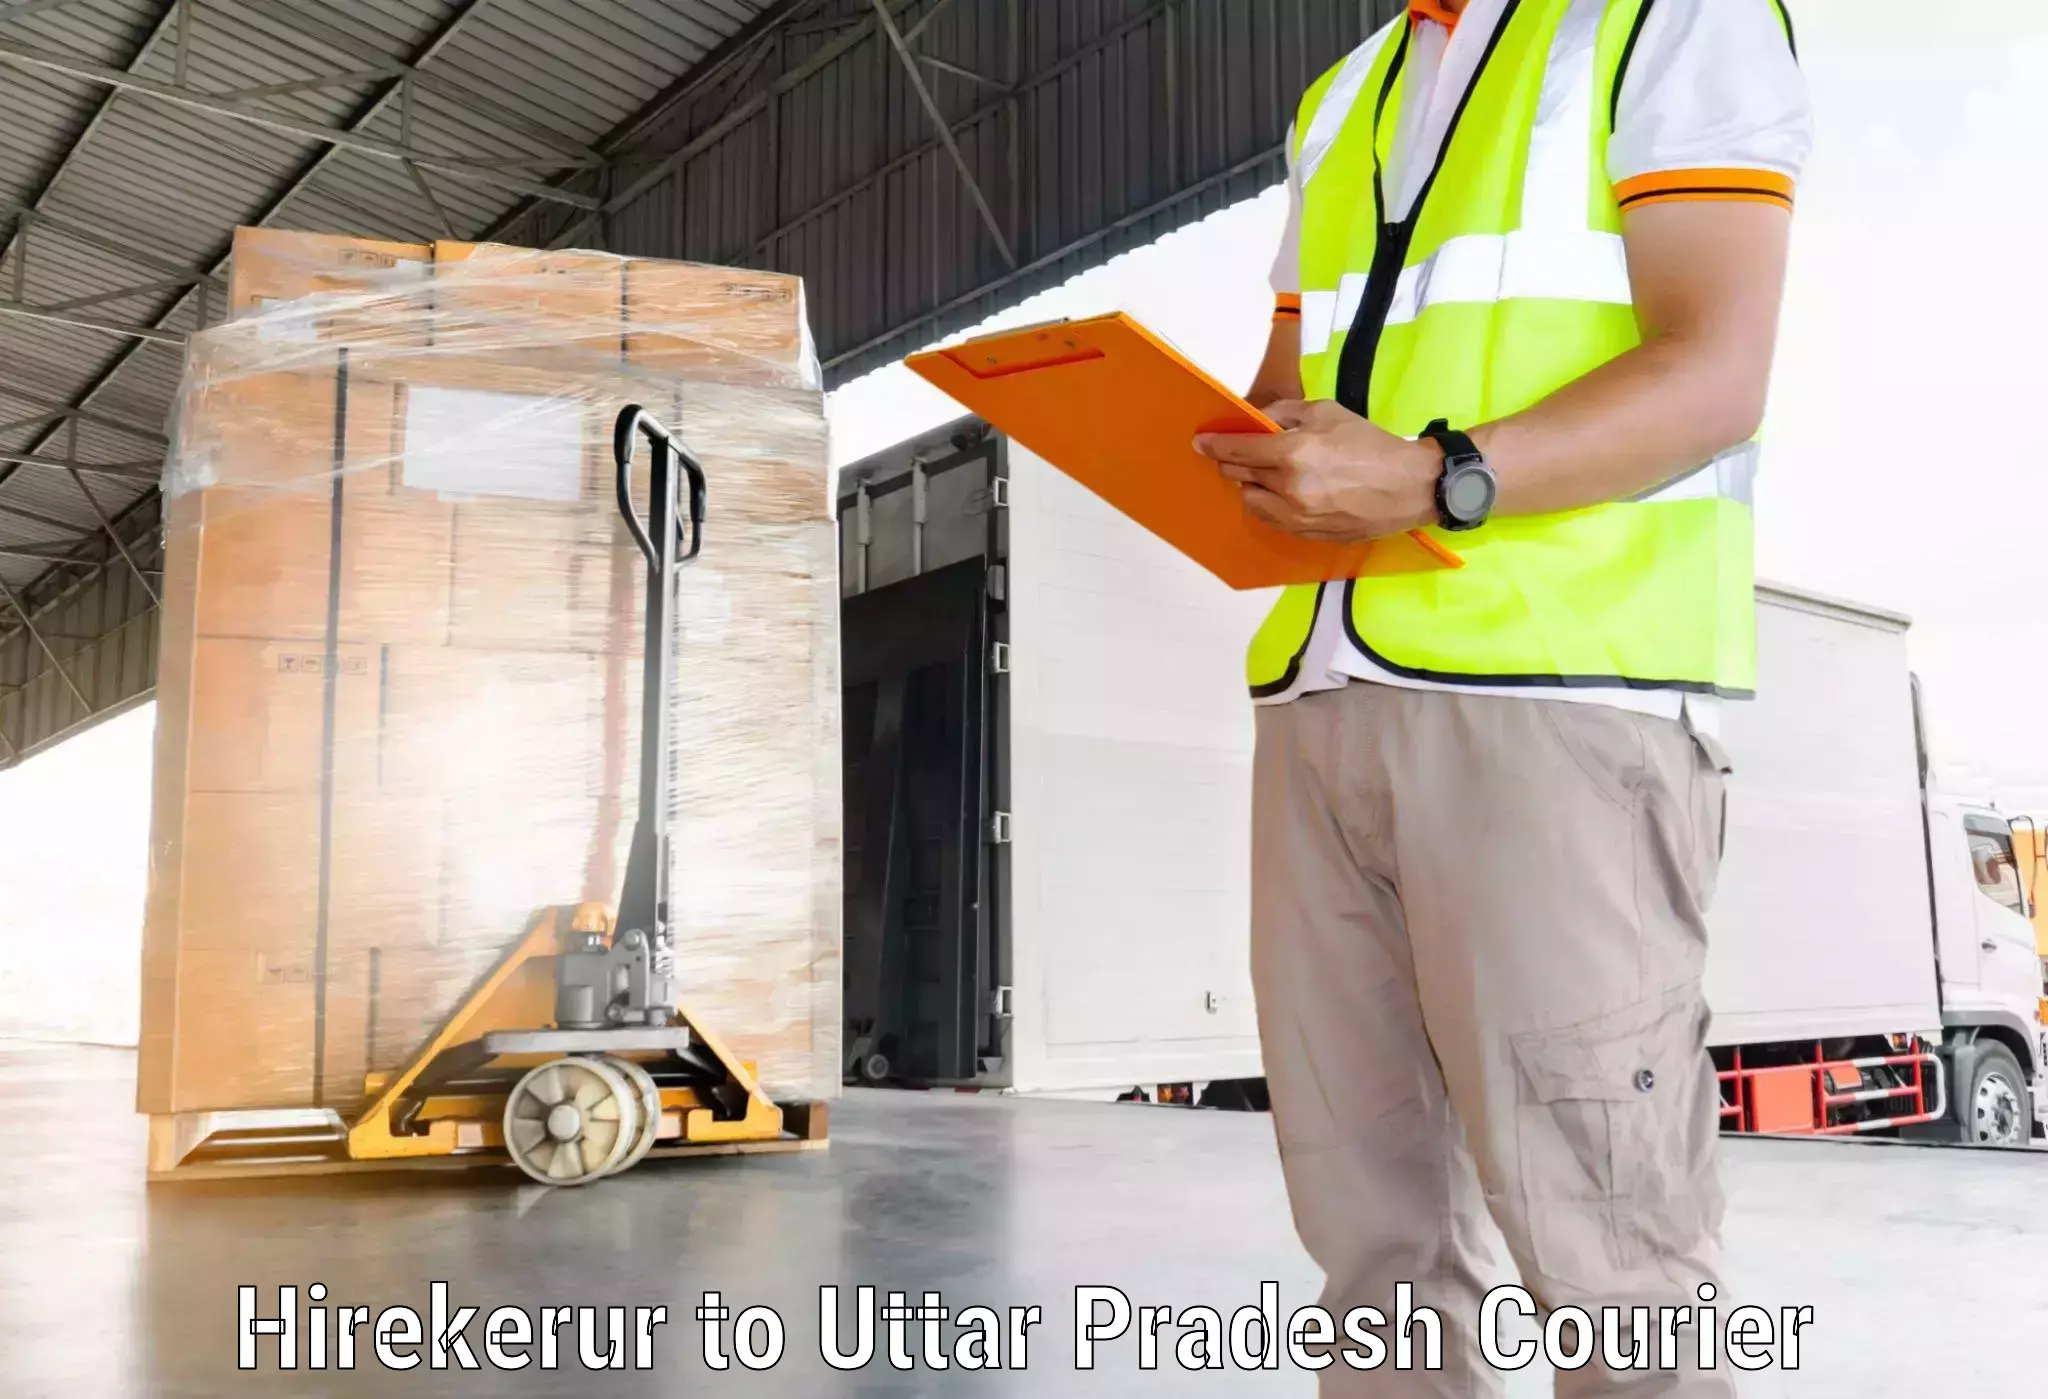 Business delivery service Hirekerur to Gorakhpur